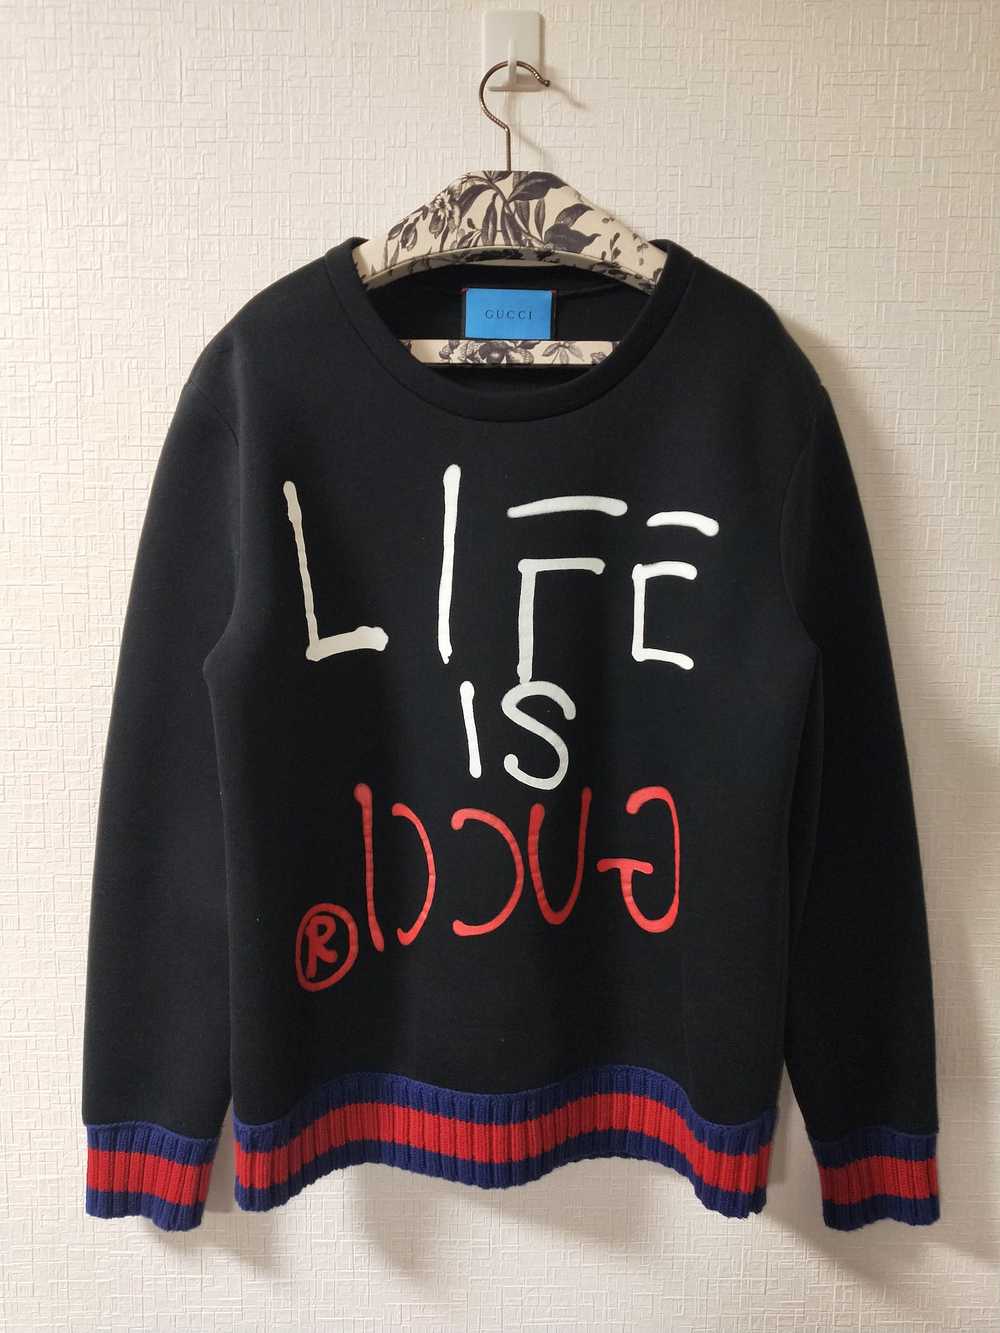 Gucci 'Life is Gucci' Neoprene Sweatshirt - image 1